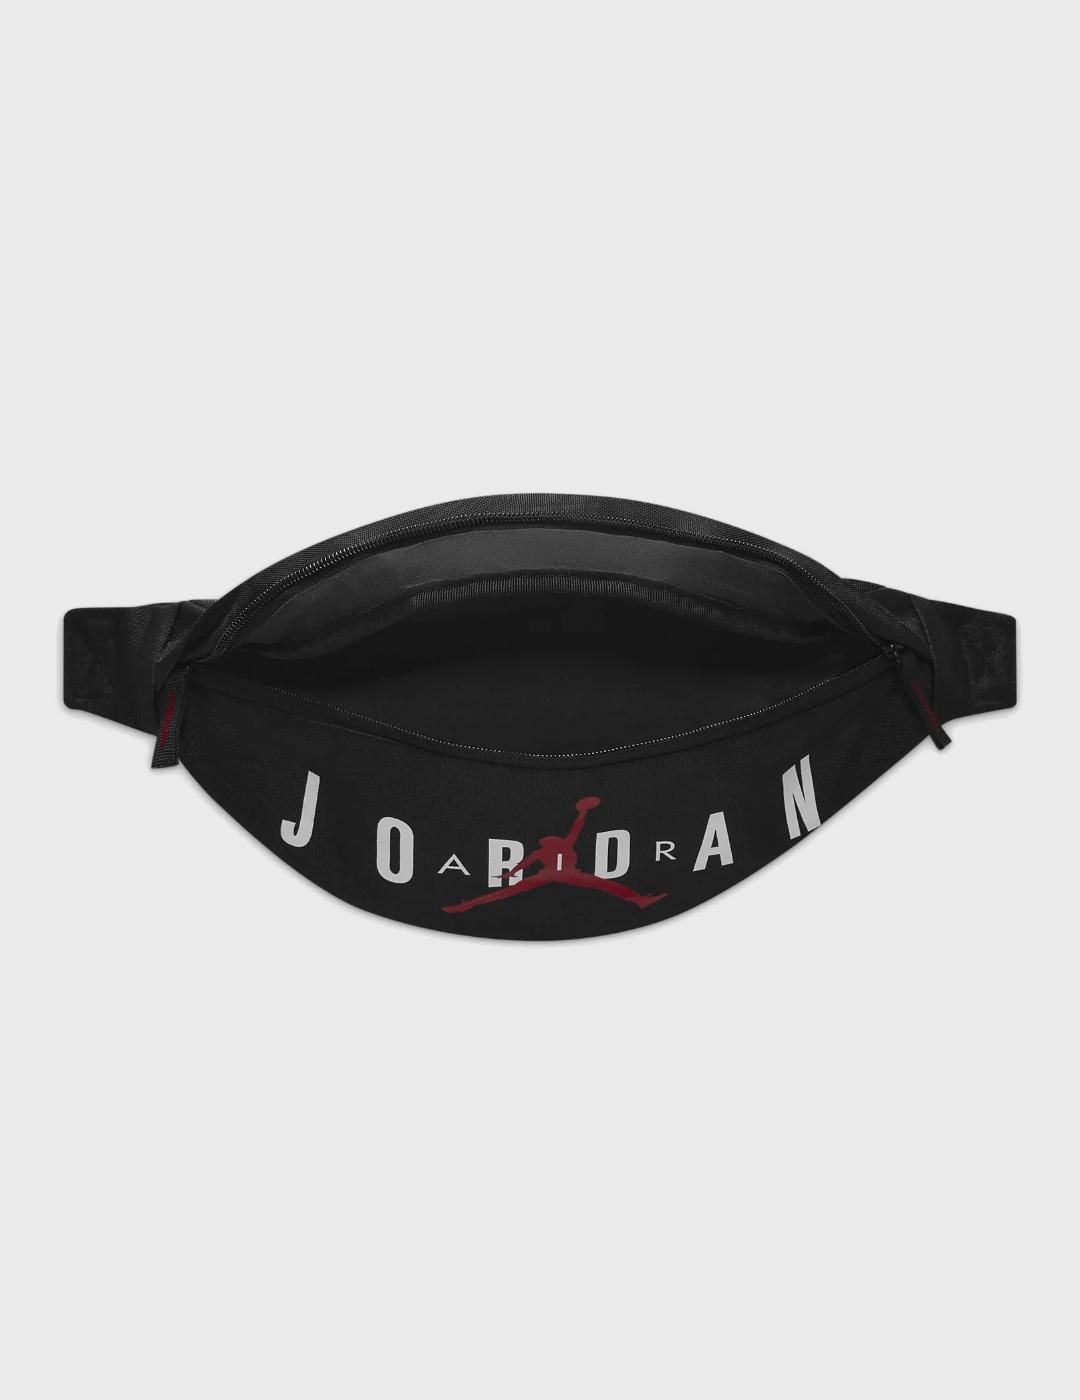 Bandolera negra Jumpman Airborne de Jordan